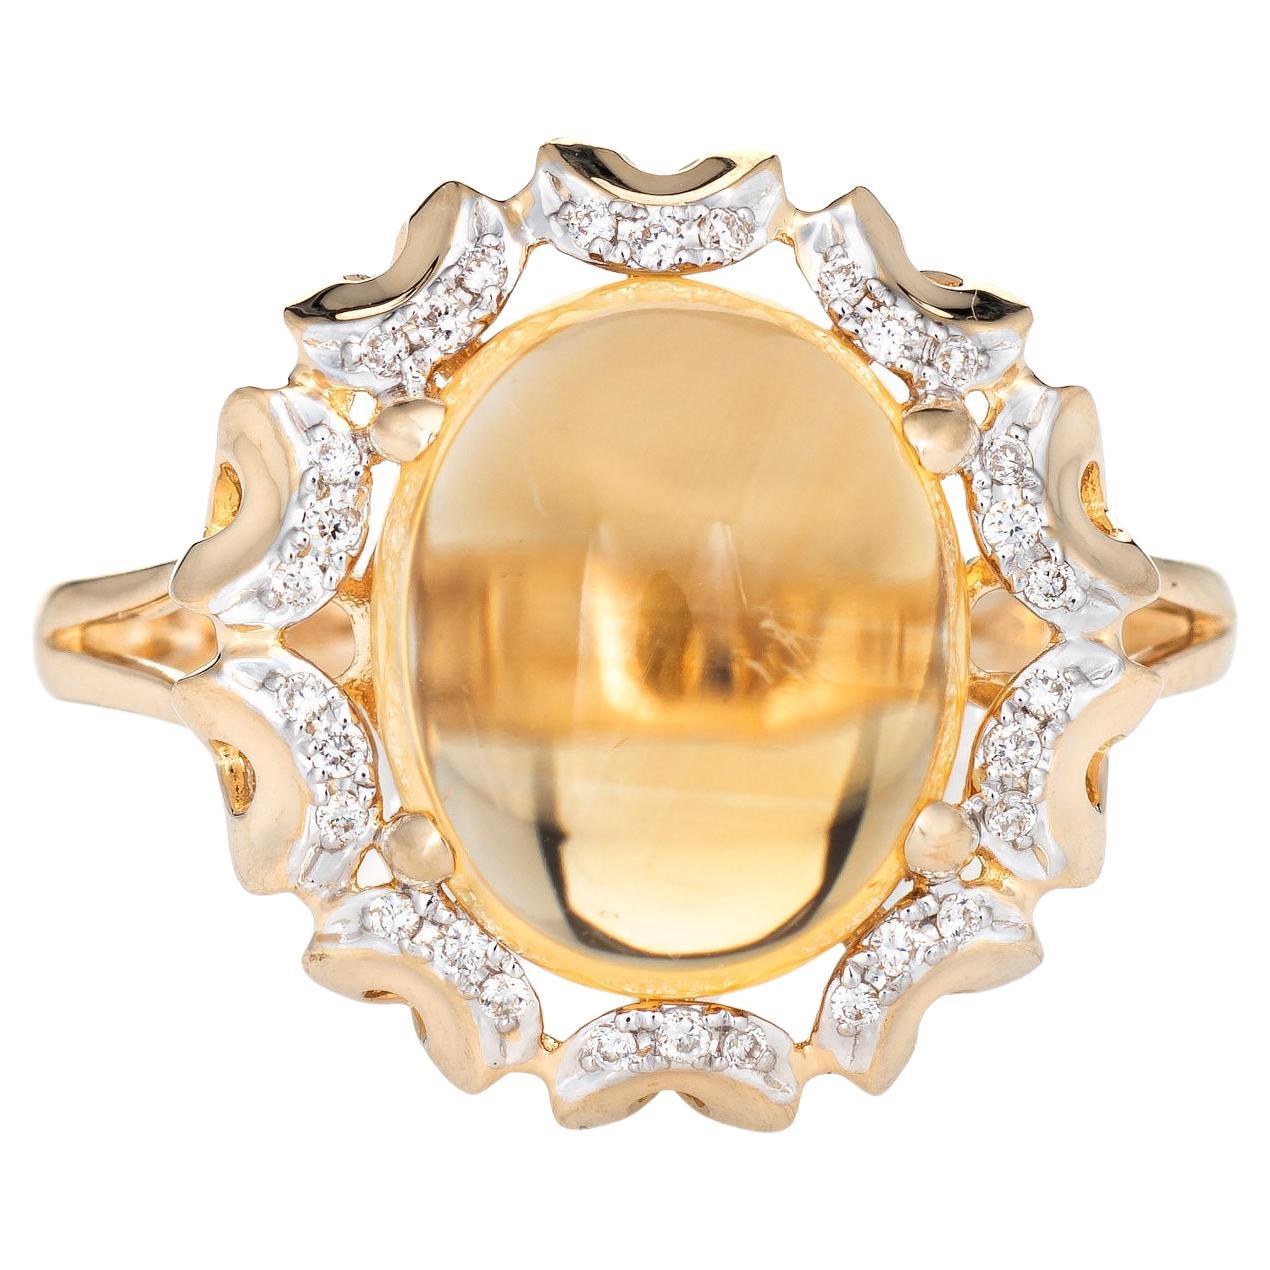 6ct Cabochon Citrine Diamond Ring Vintage 14k Yellow Gold Estate Fine Jewelry